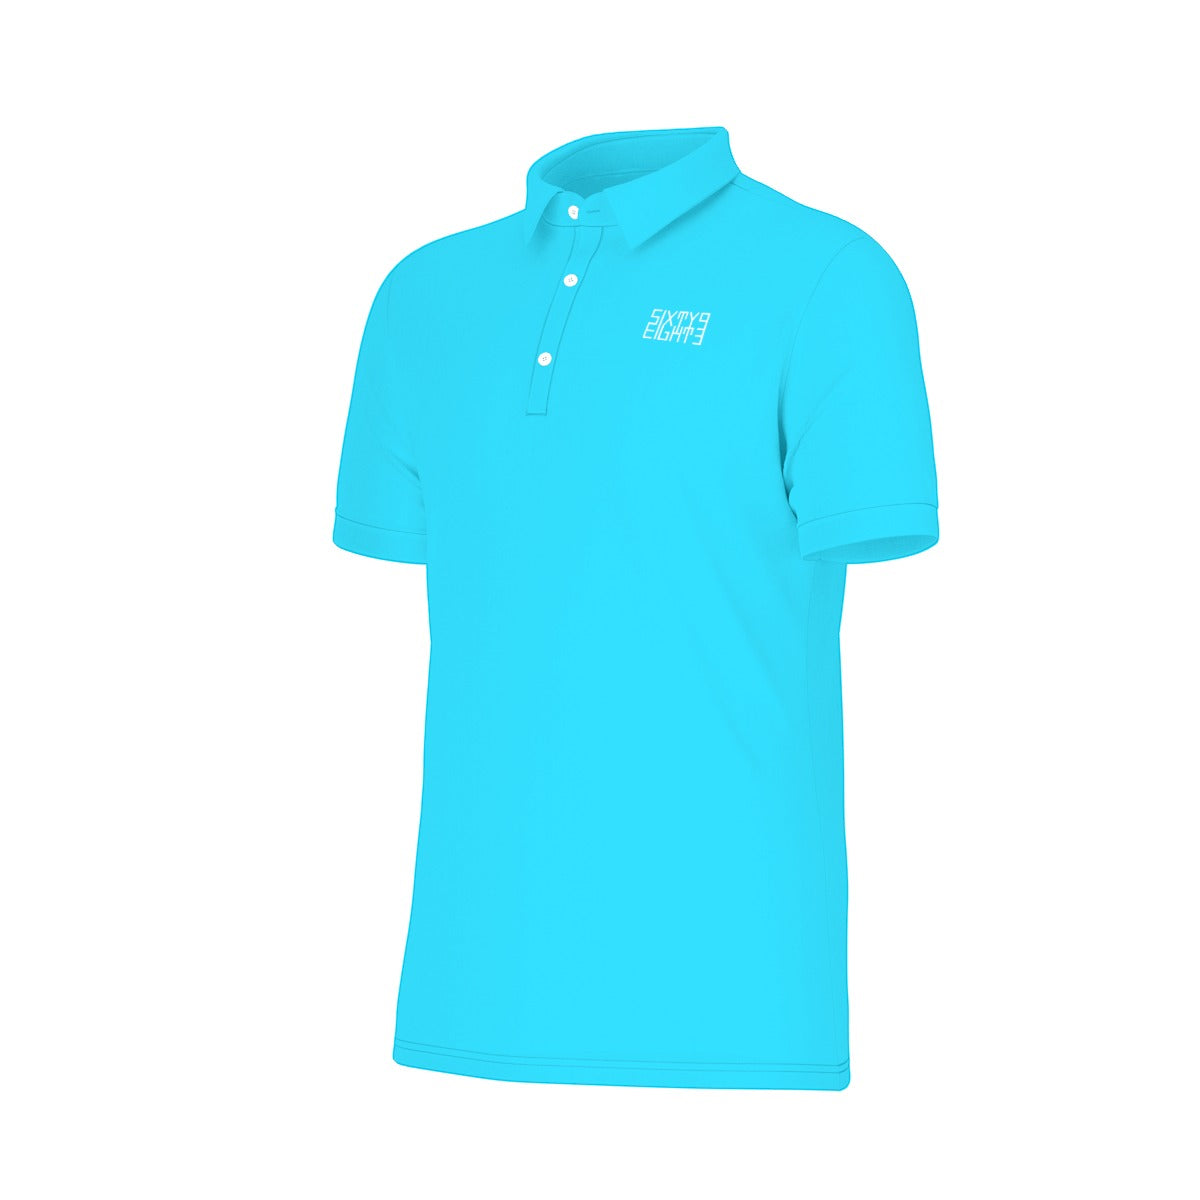 Sixty Eight 93 Logo White Aqua Blue Men's Stretch Polo Shirt